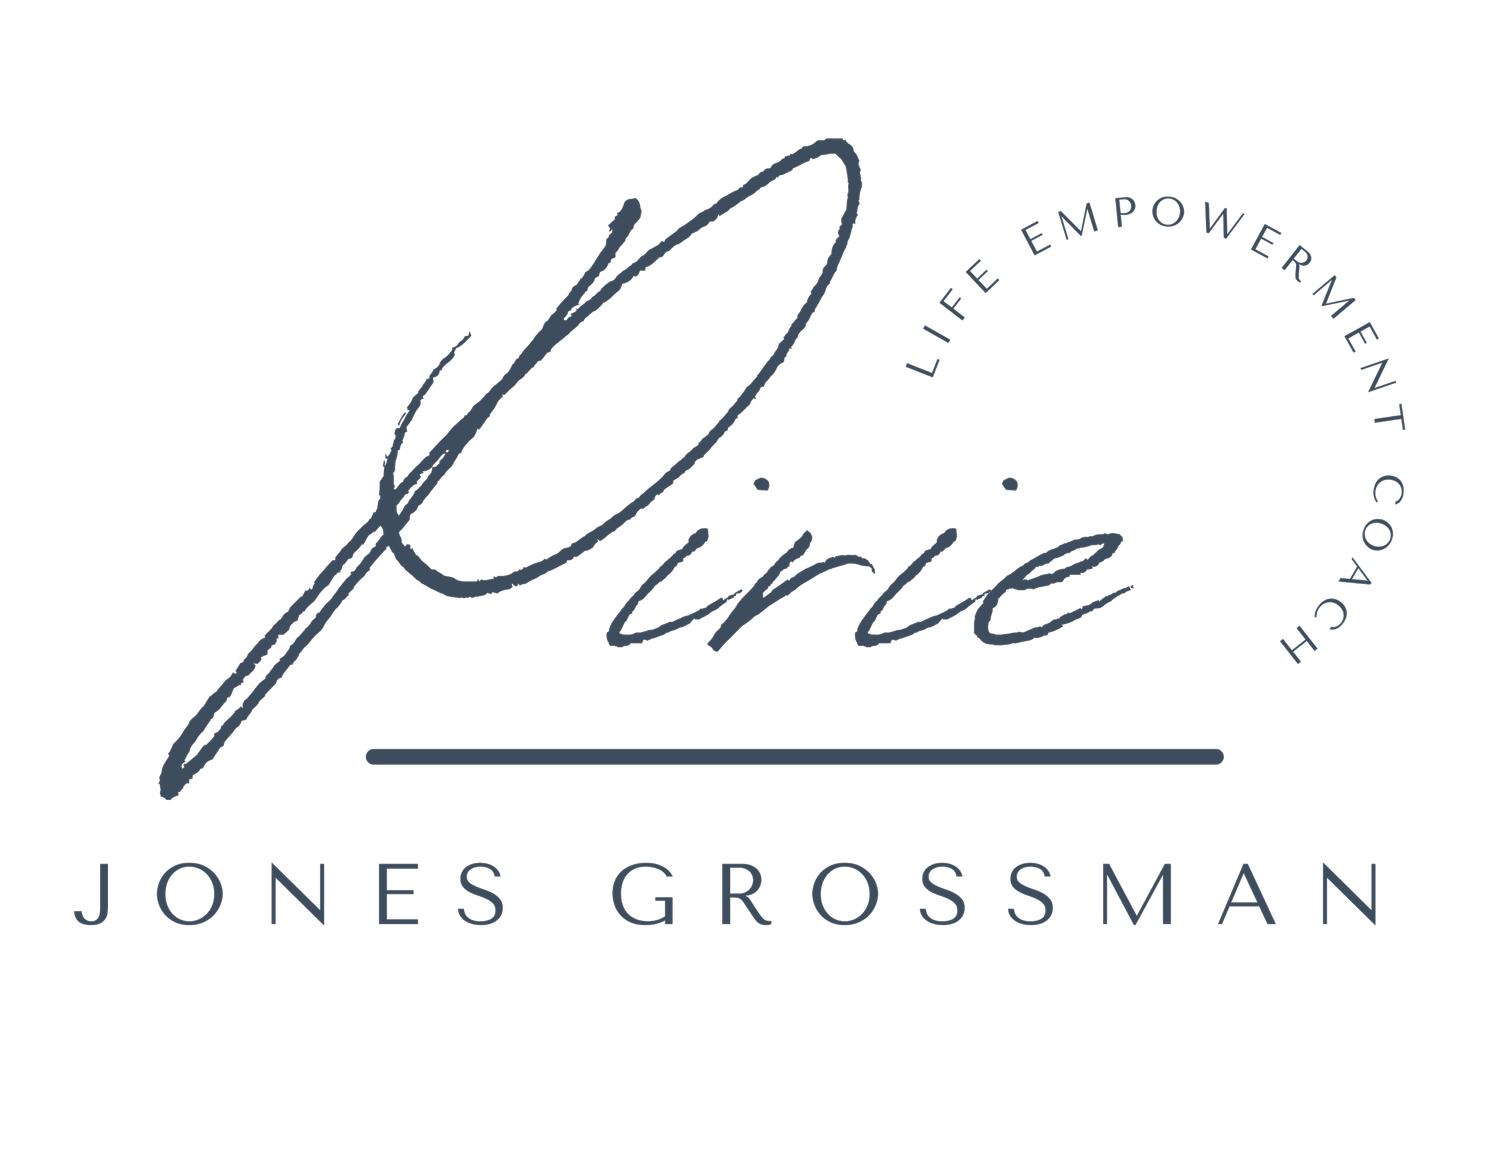 Pirie Jones Grossman